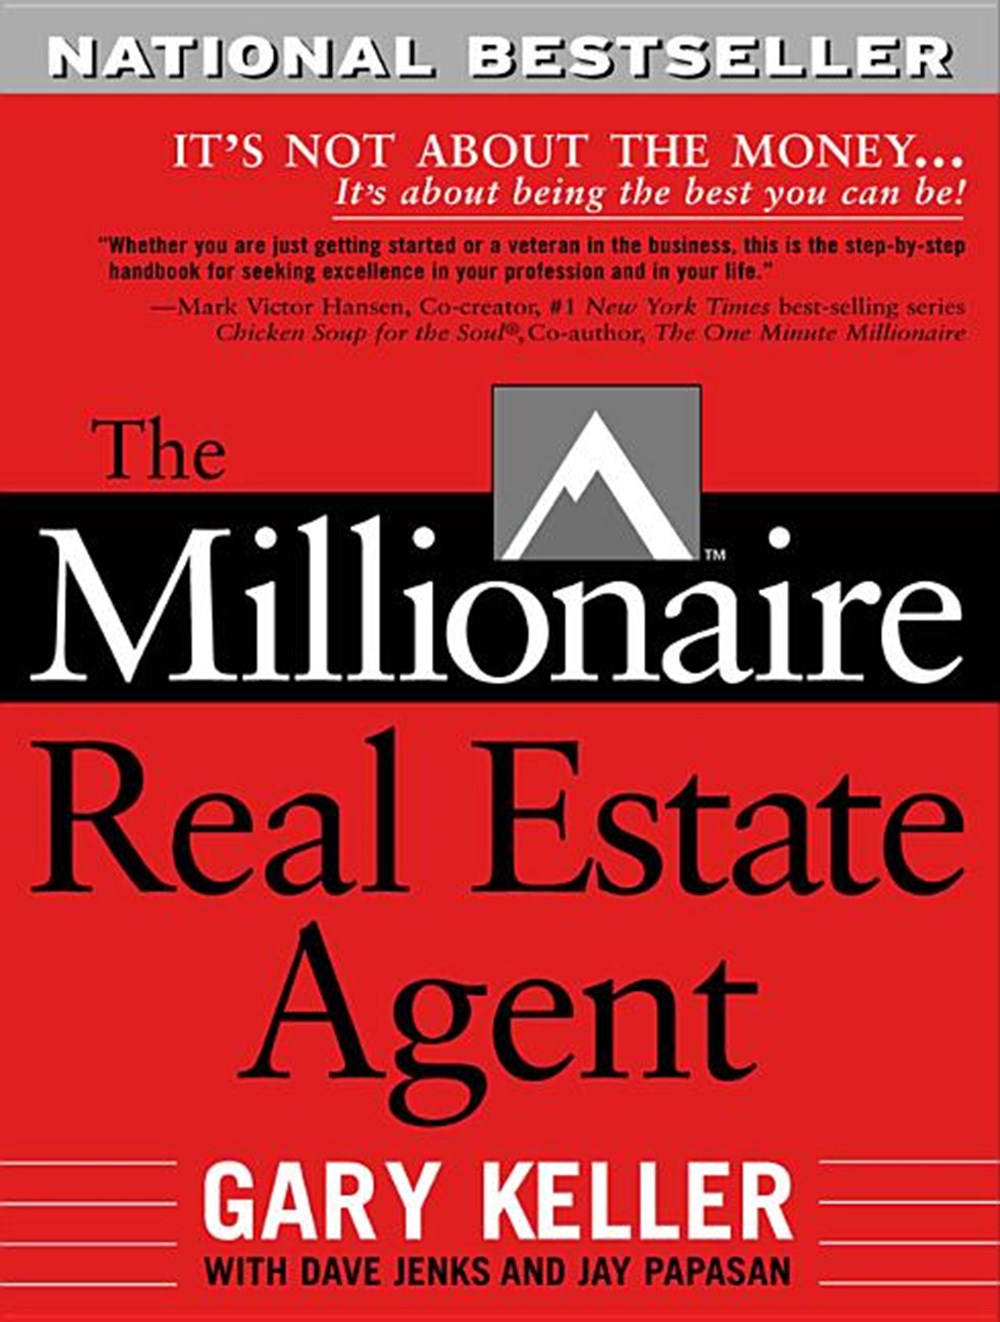 Millionaire Real Estate Agent